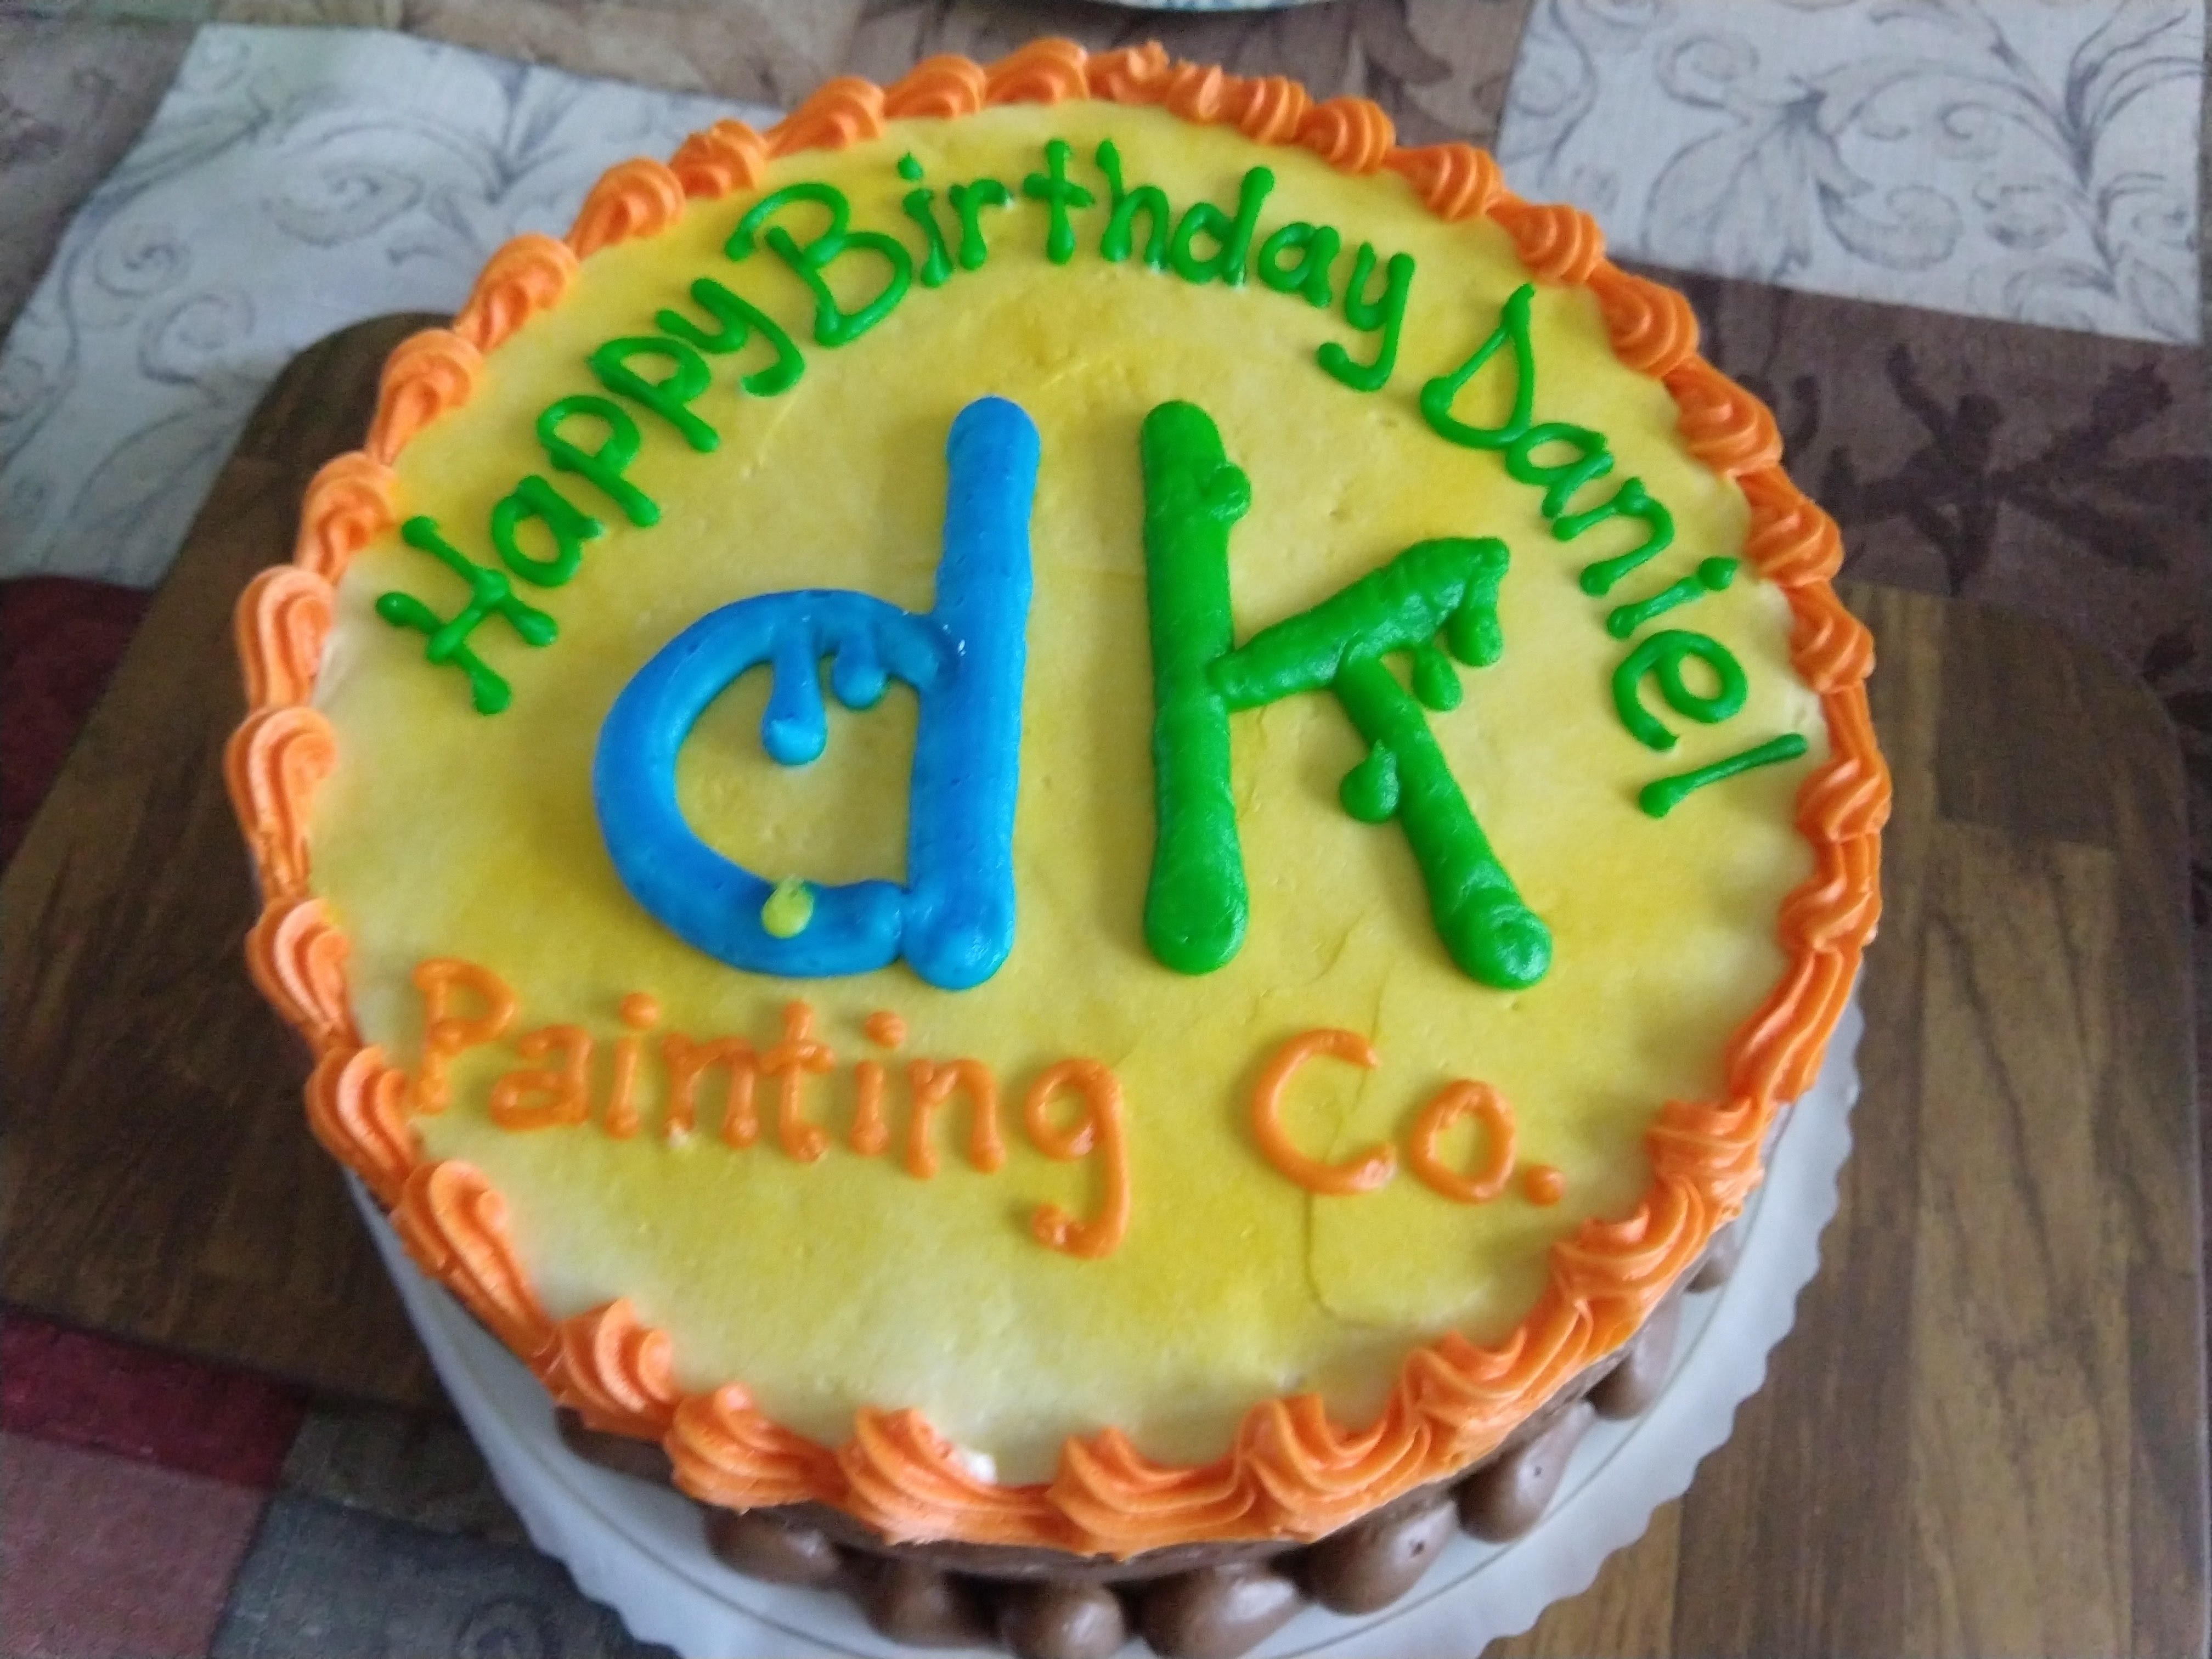 DK Painting Co. Logo